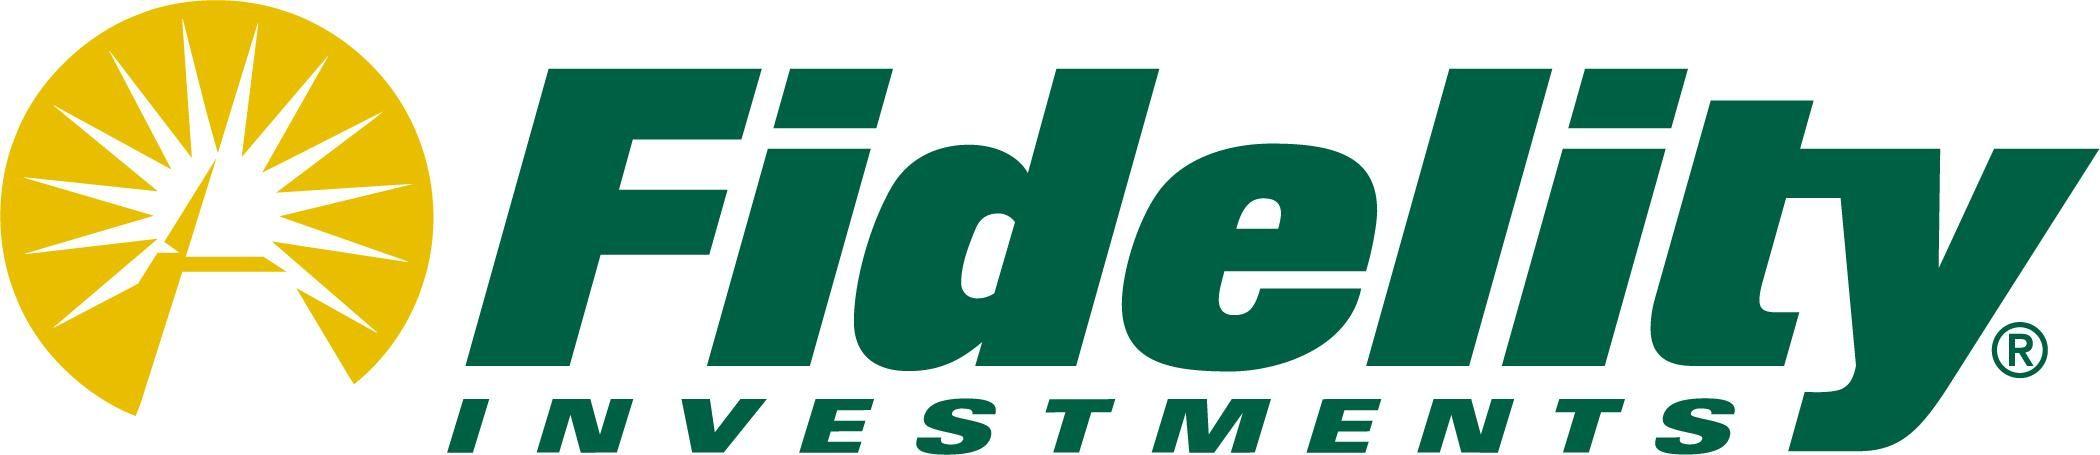 Fidelity Company Logo - Fidelity investments Logos